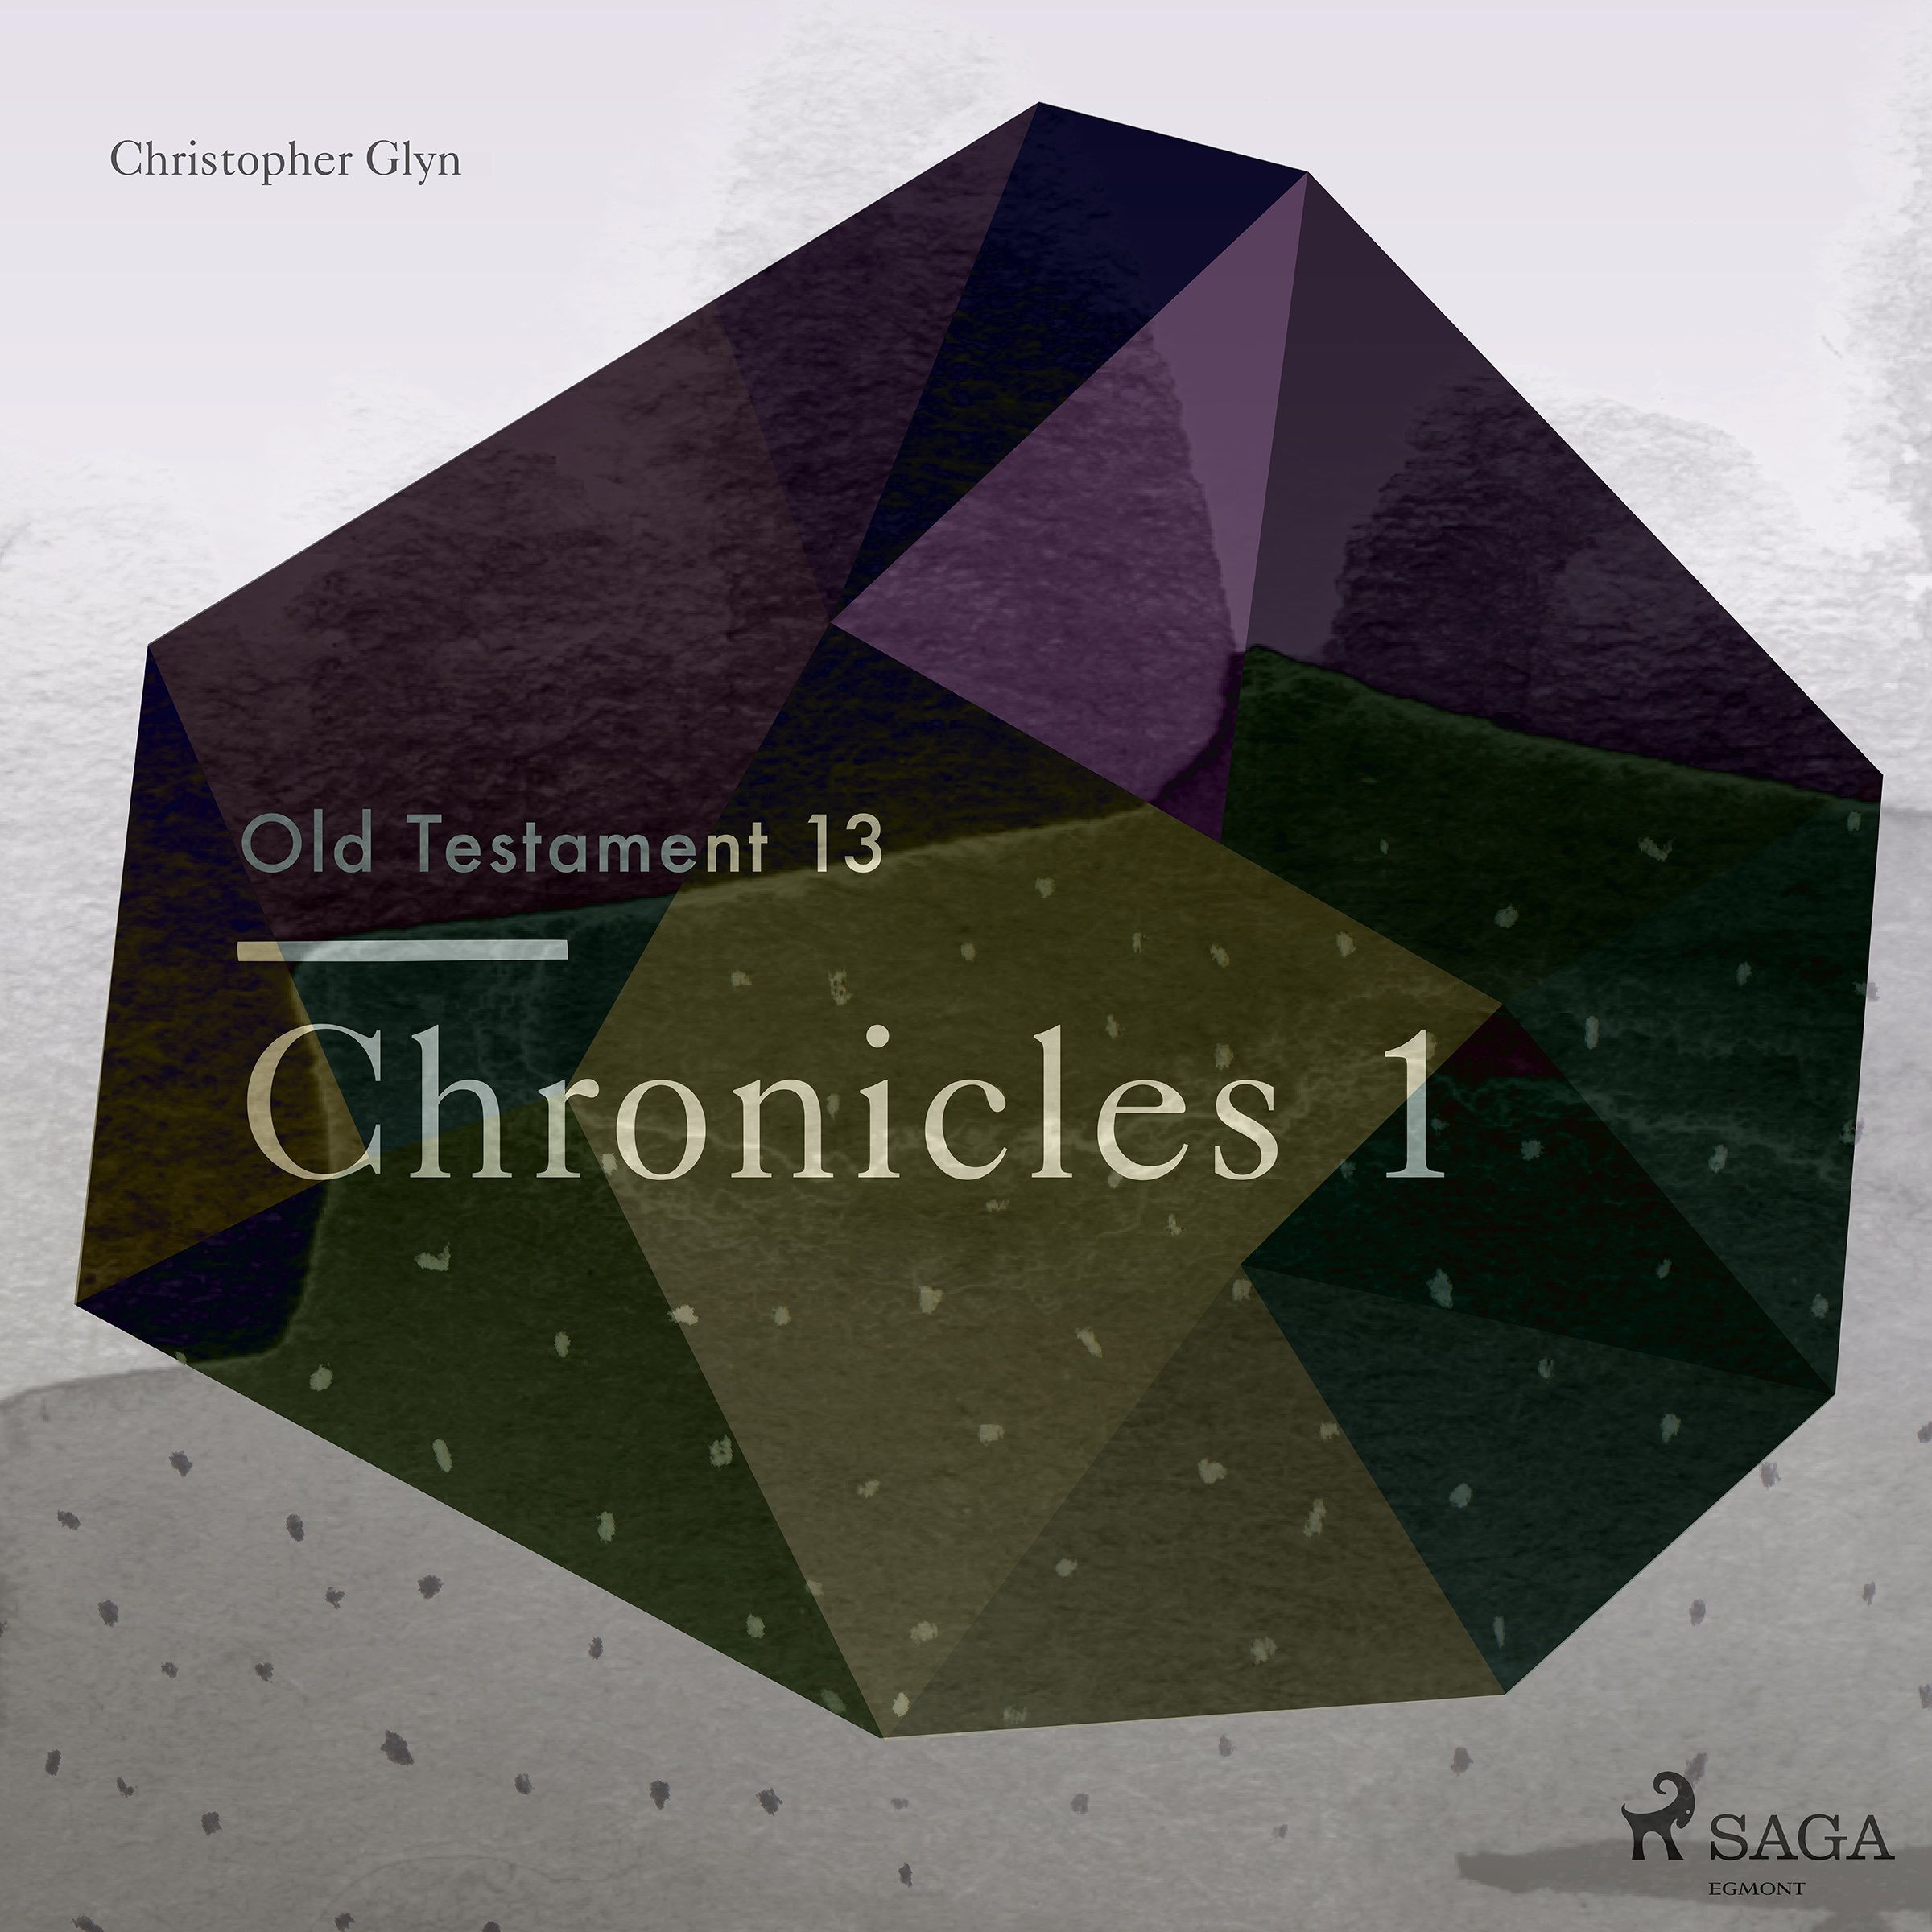 The Old Testament 13 - Chronicles 1, lydbog af Christopher Glyn